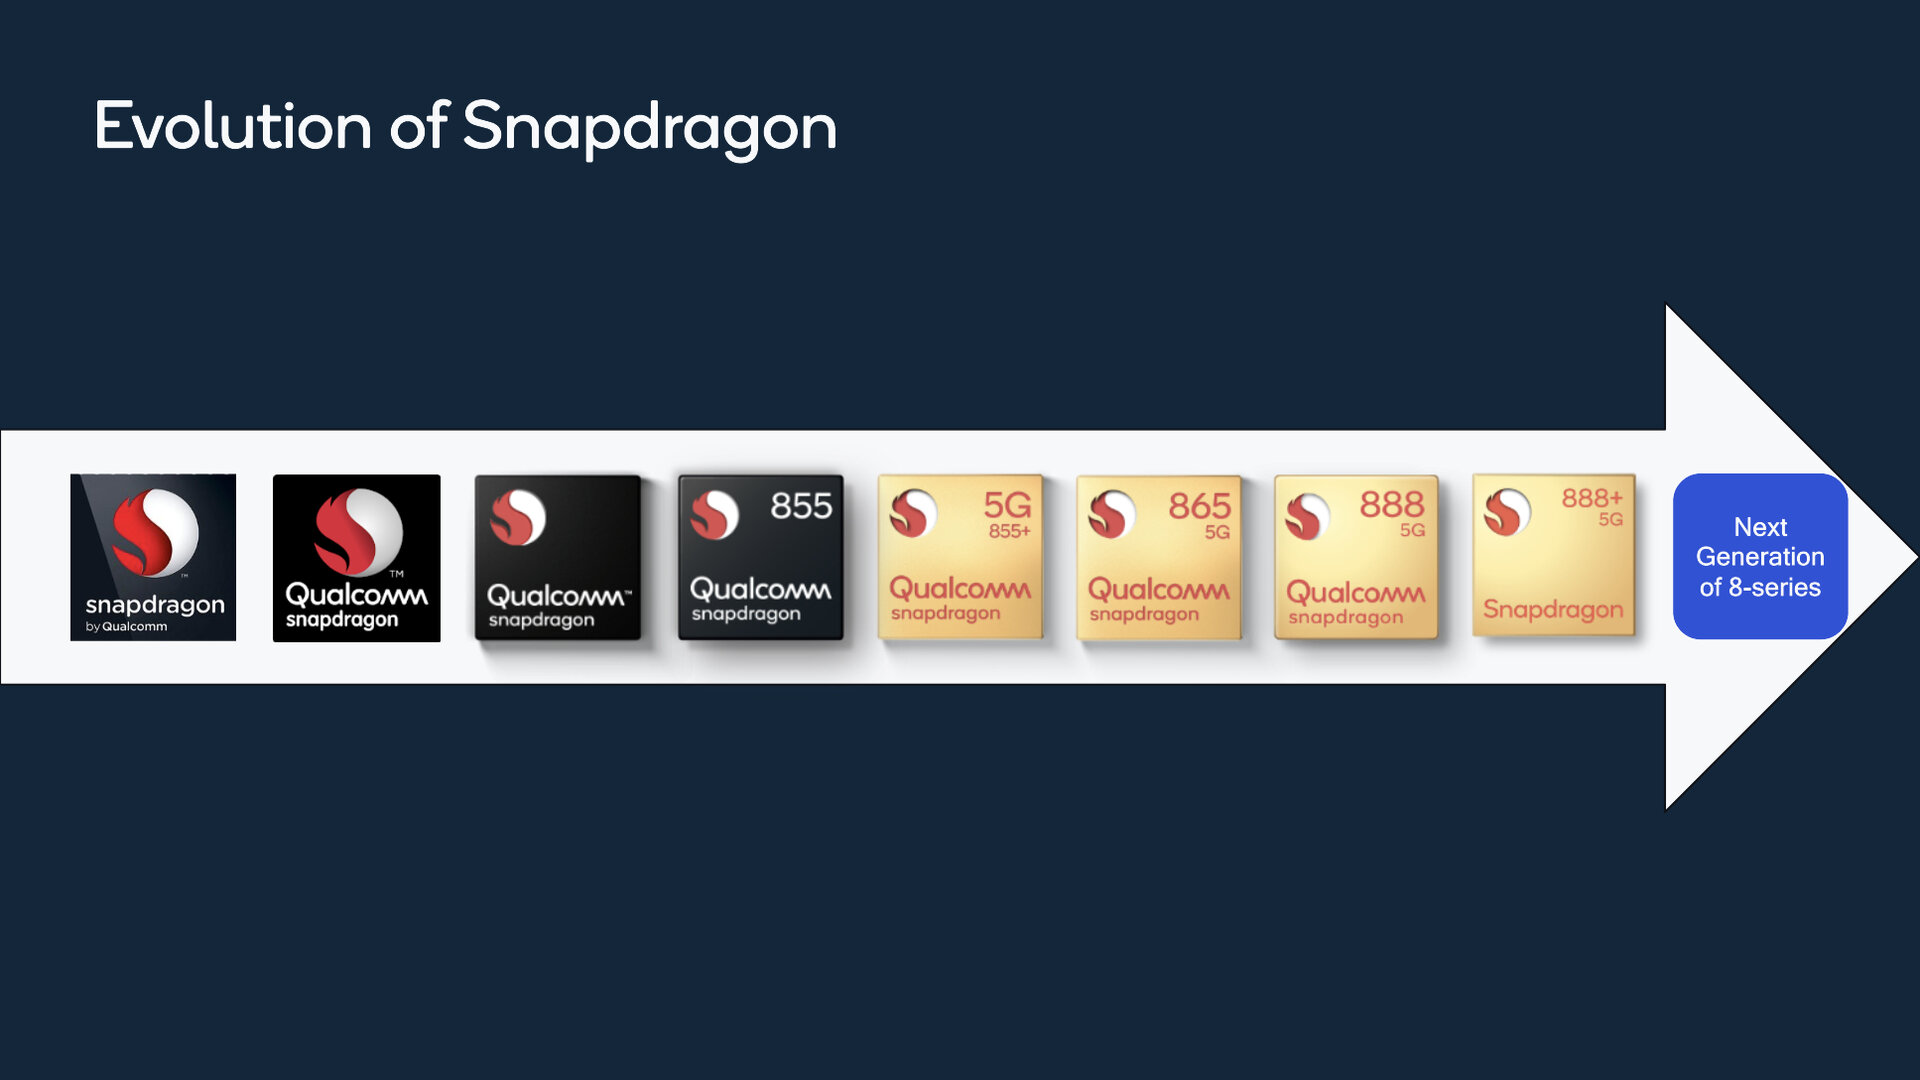 Wie das Snapdragon-Branding bislang erfolgte